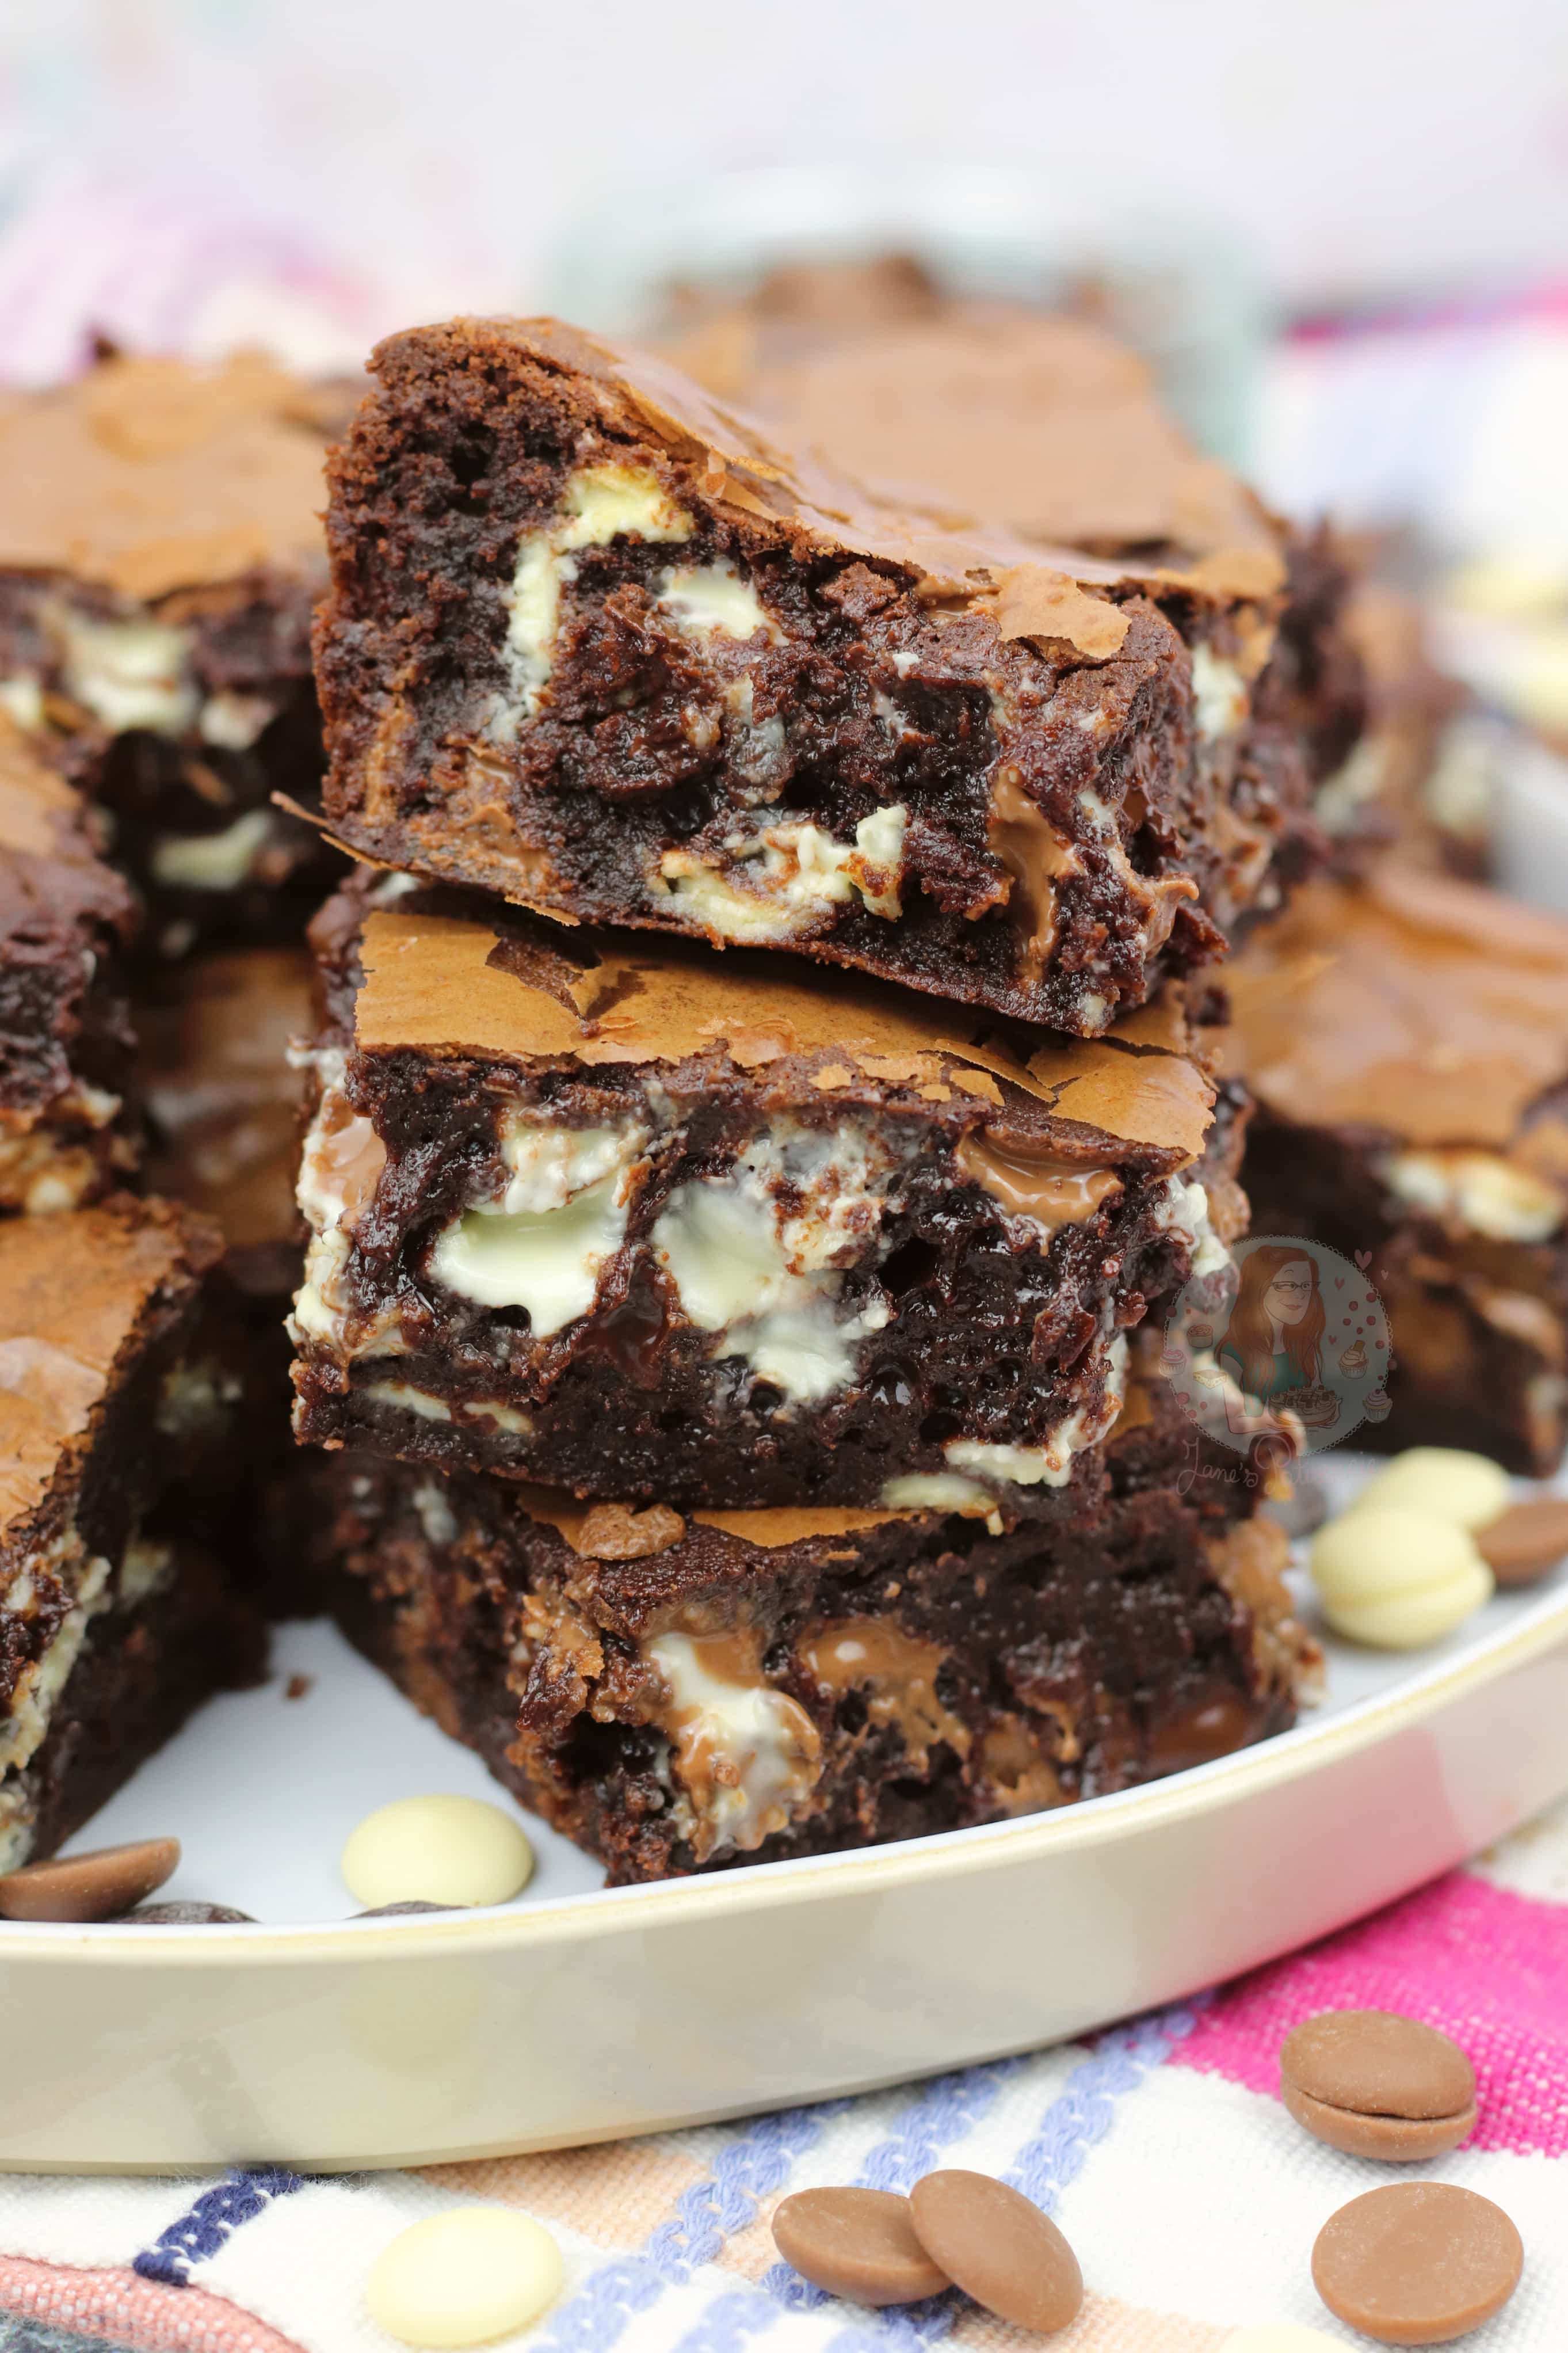 Triple Chocolate Brownies - Back to Basics - Jane's Patisserie